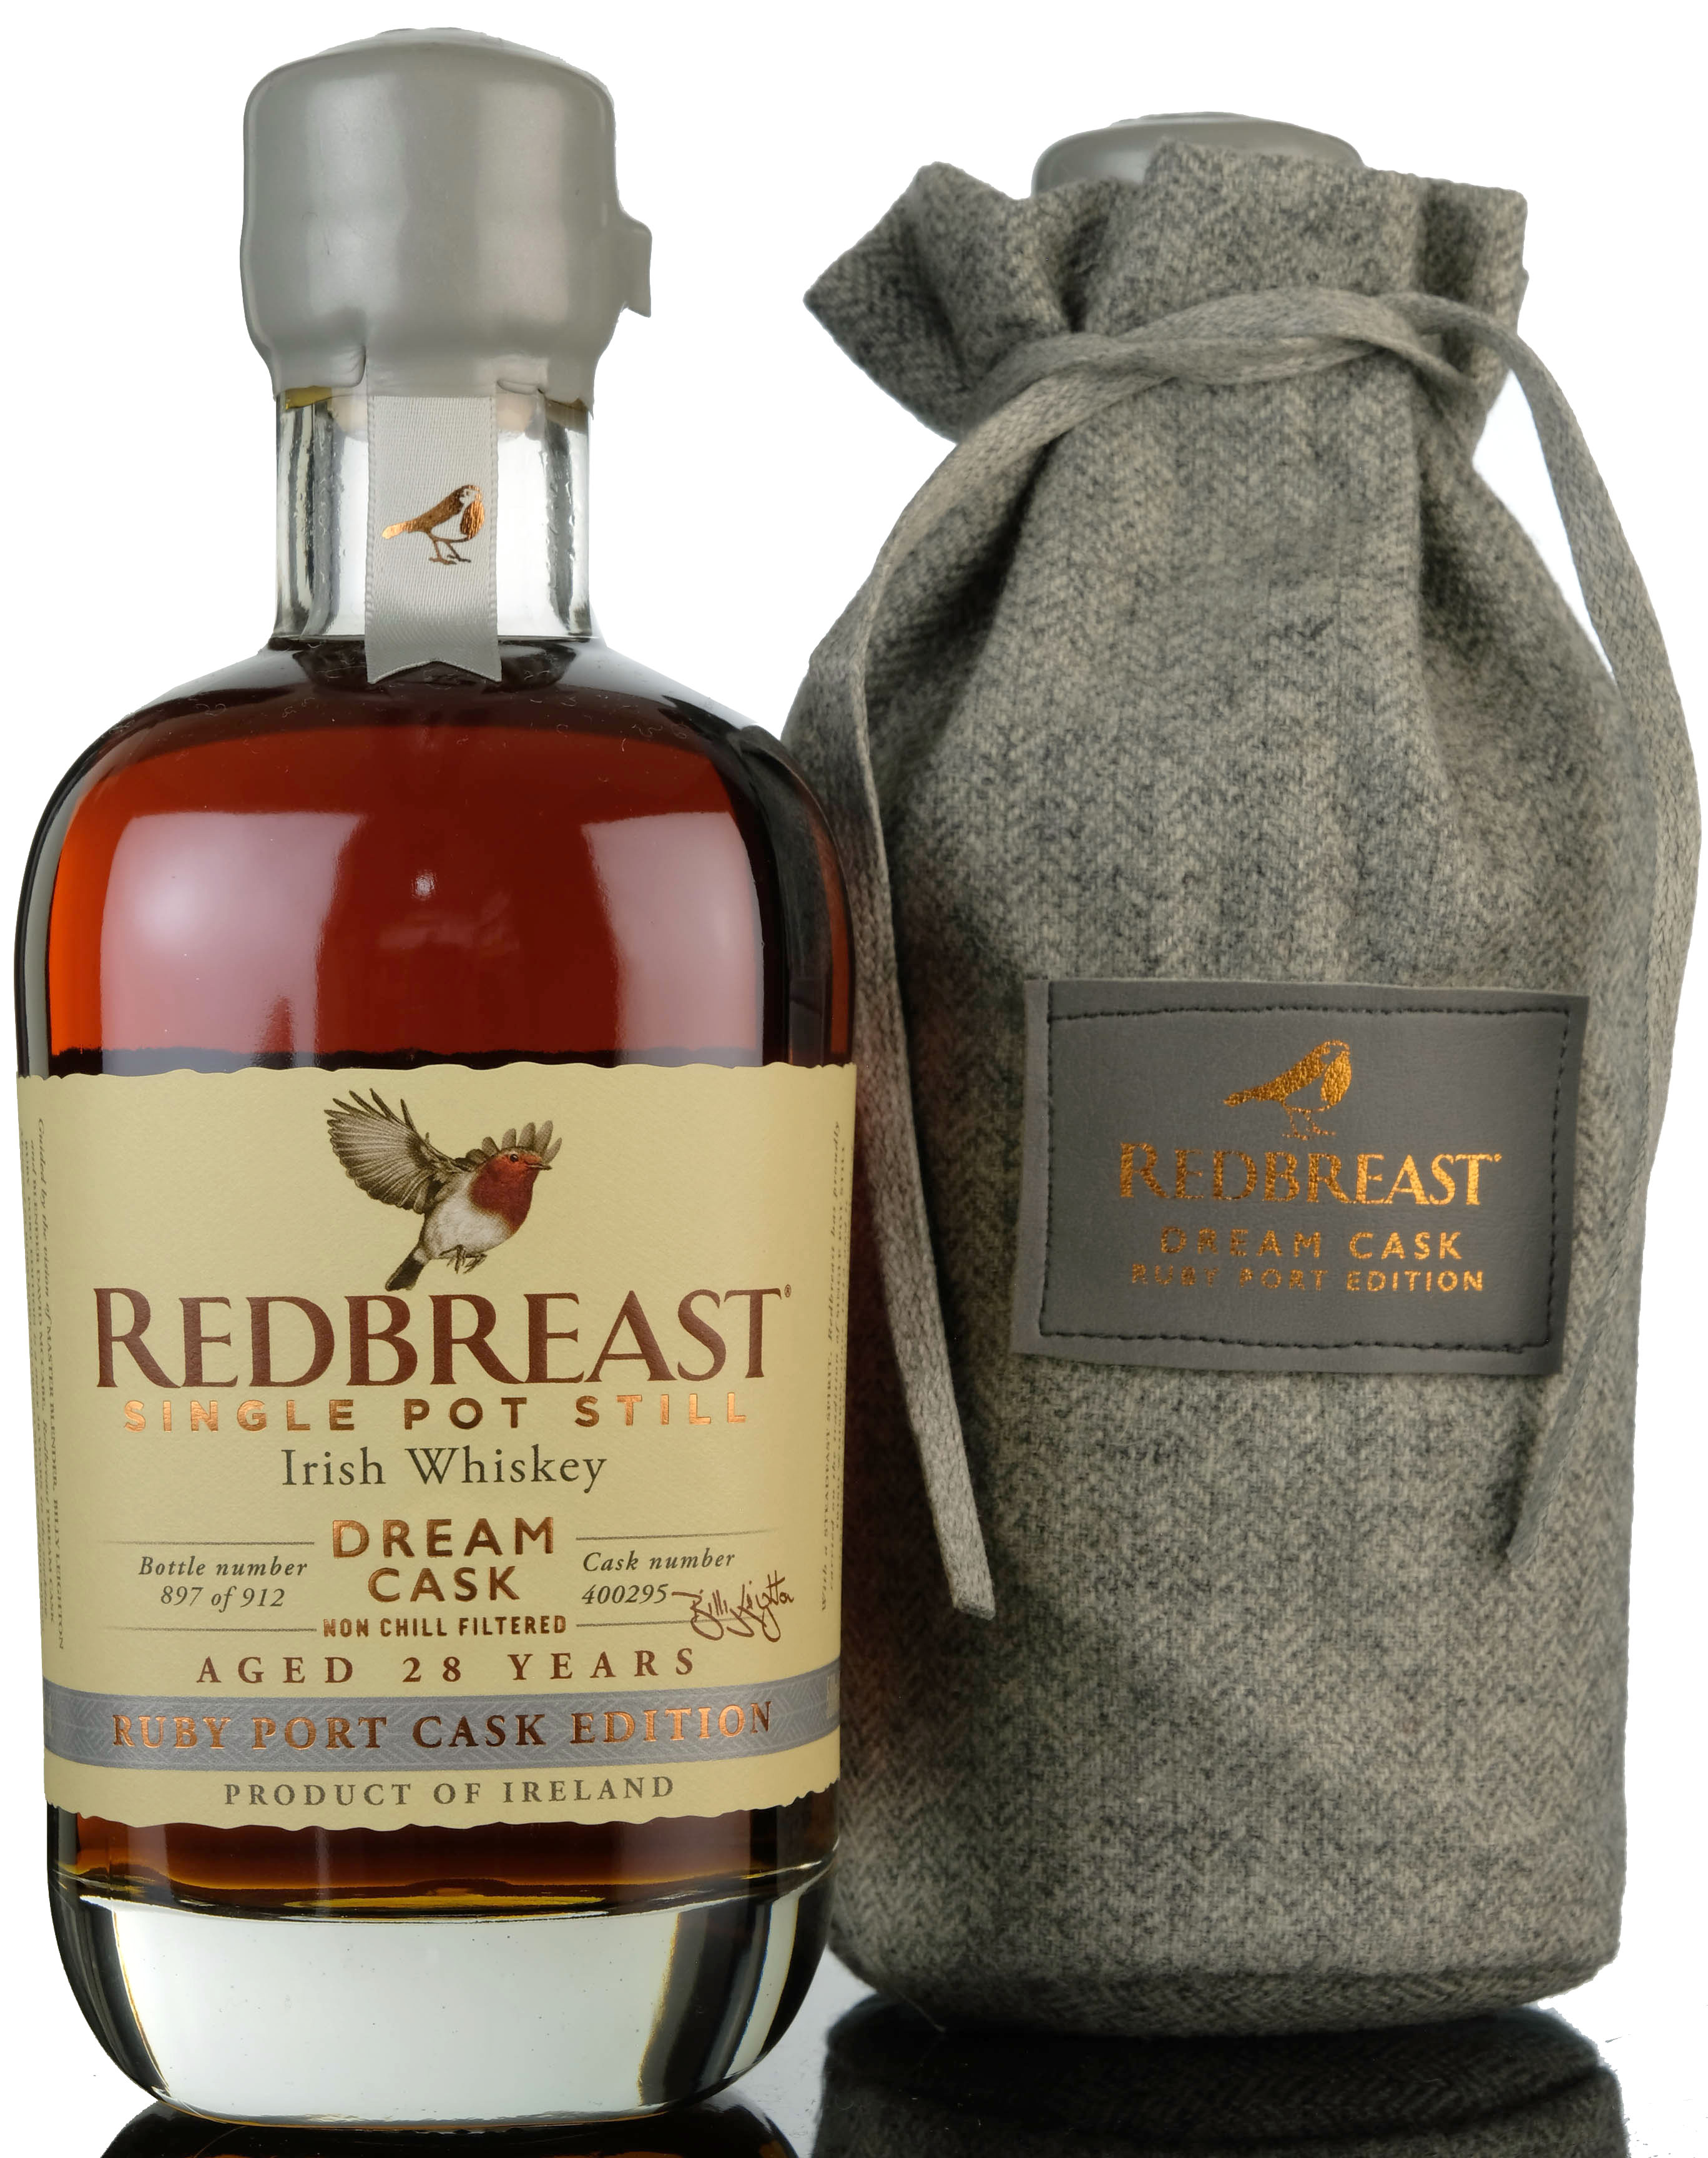 Redbreast 28 Year Old - Single Cask 400295 - Irish Whiskey - 50cl